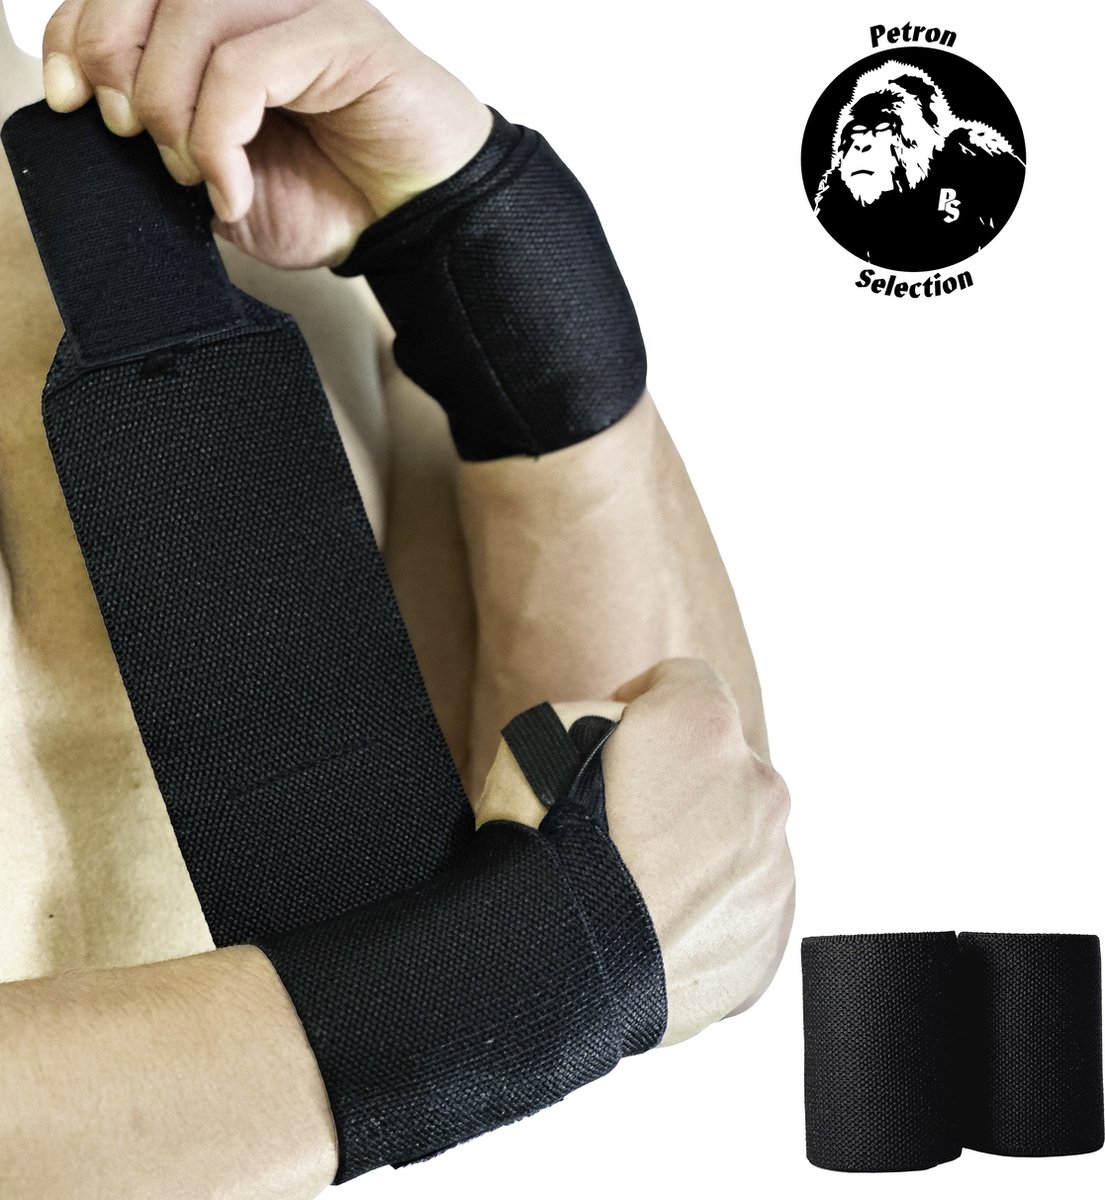 Petron Selection - Wrist Wraps - One Size - Nylon - Geweven Zwart - Fitness Straps - Lifting - Krachttraining - Polsbandage - Gym Straps - Petron Selection